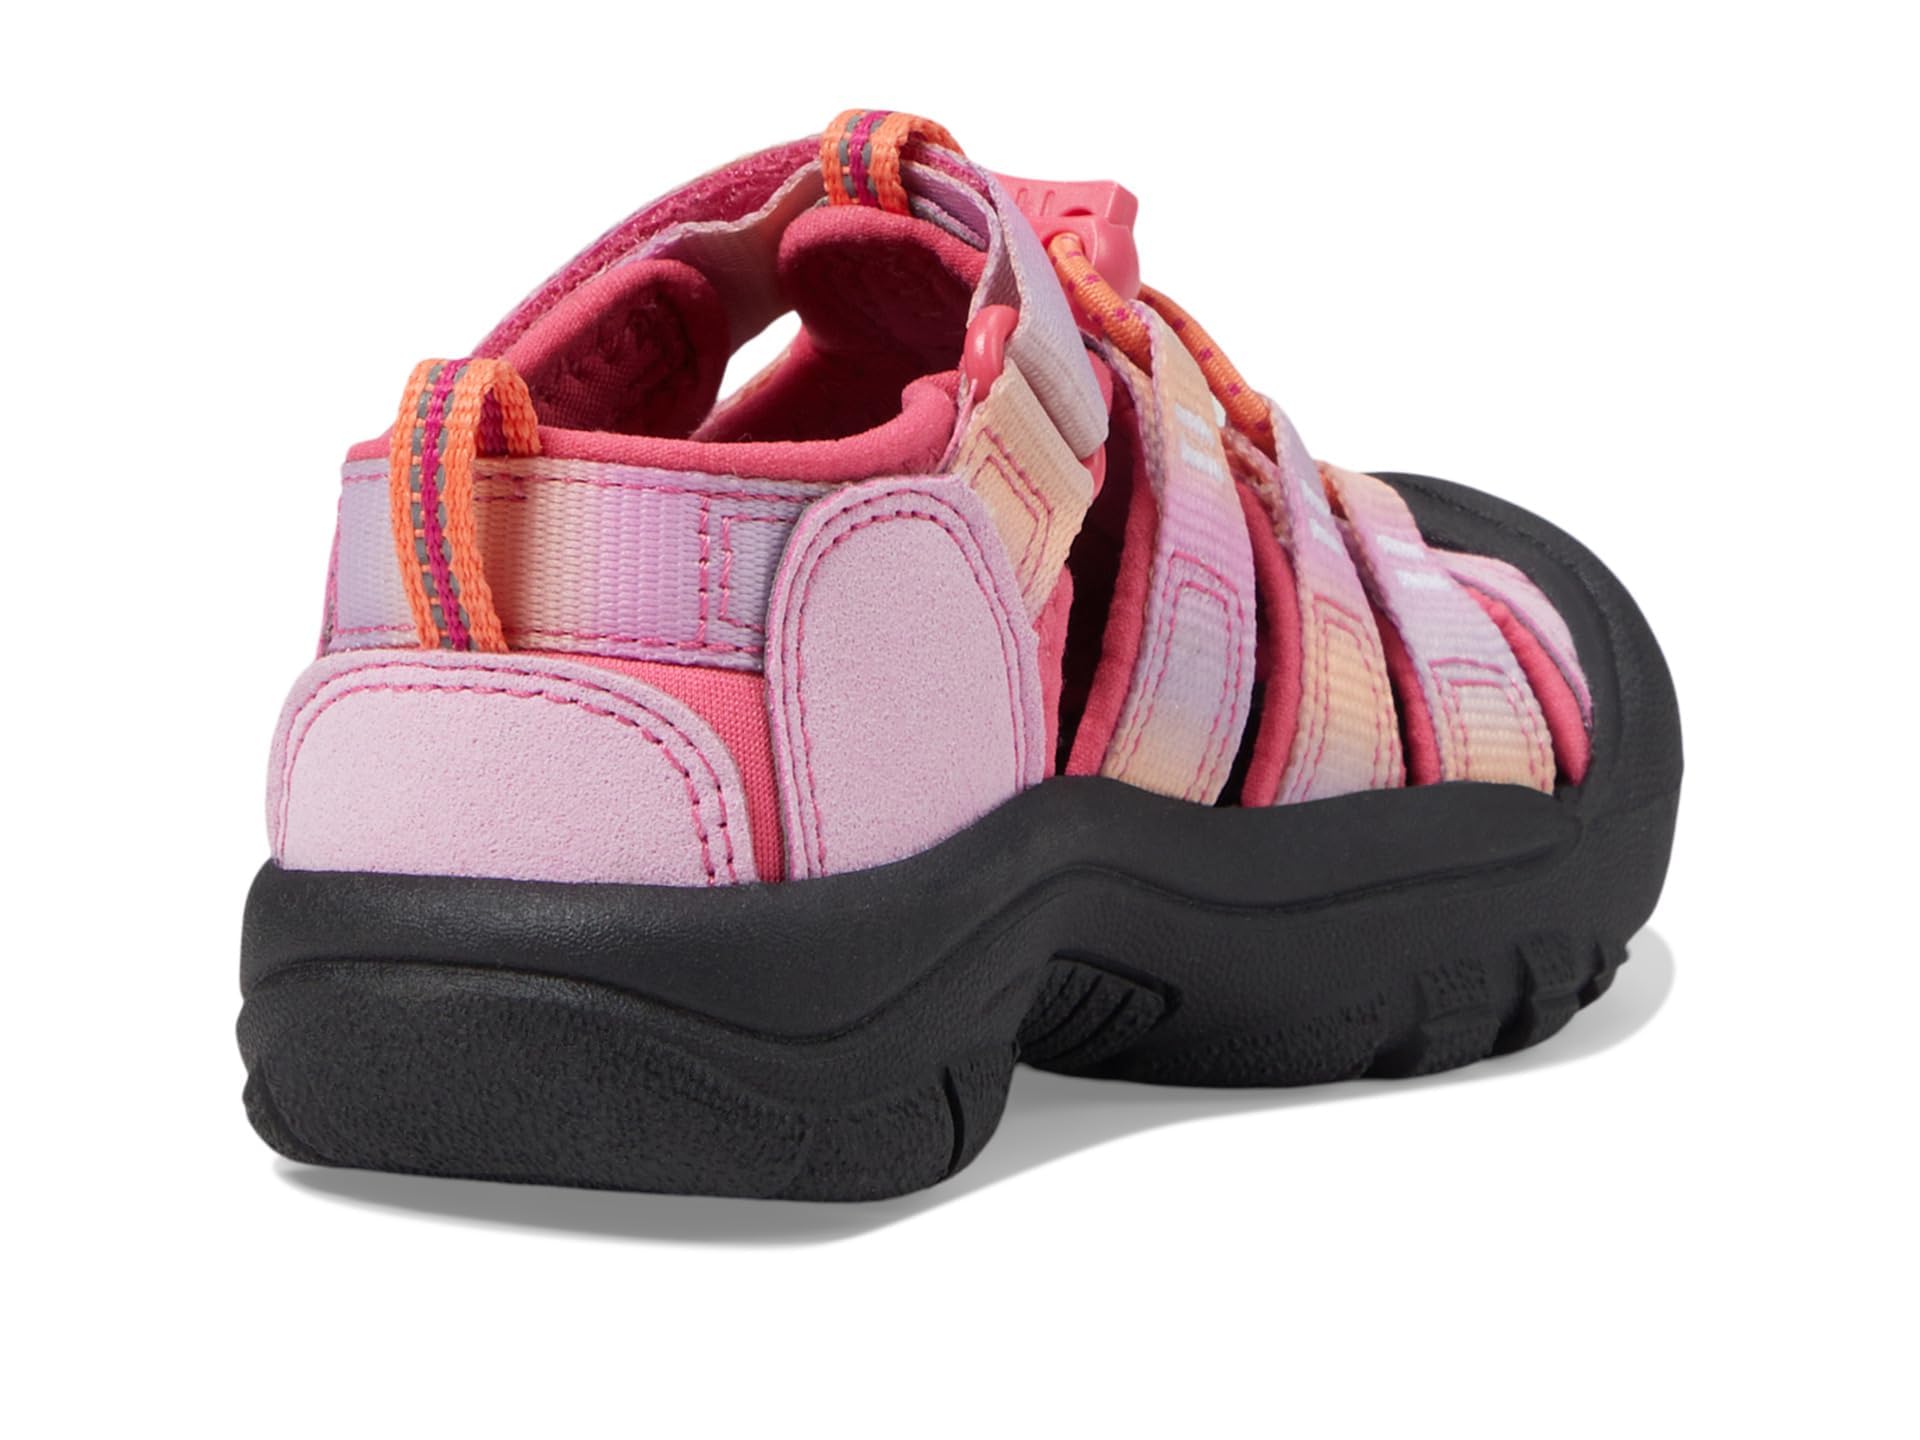 KEEN Newport H2 Closed Toe Water Sandals, Hot Pink/Pastel Lavender, 8 US Unisex Little Kid